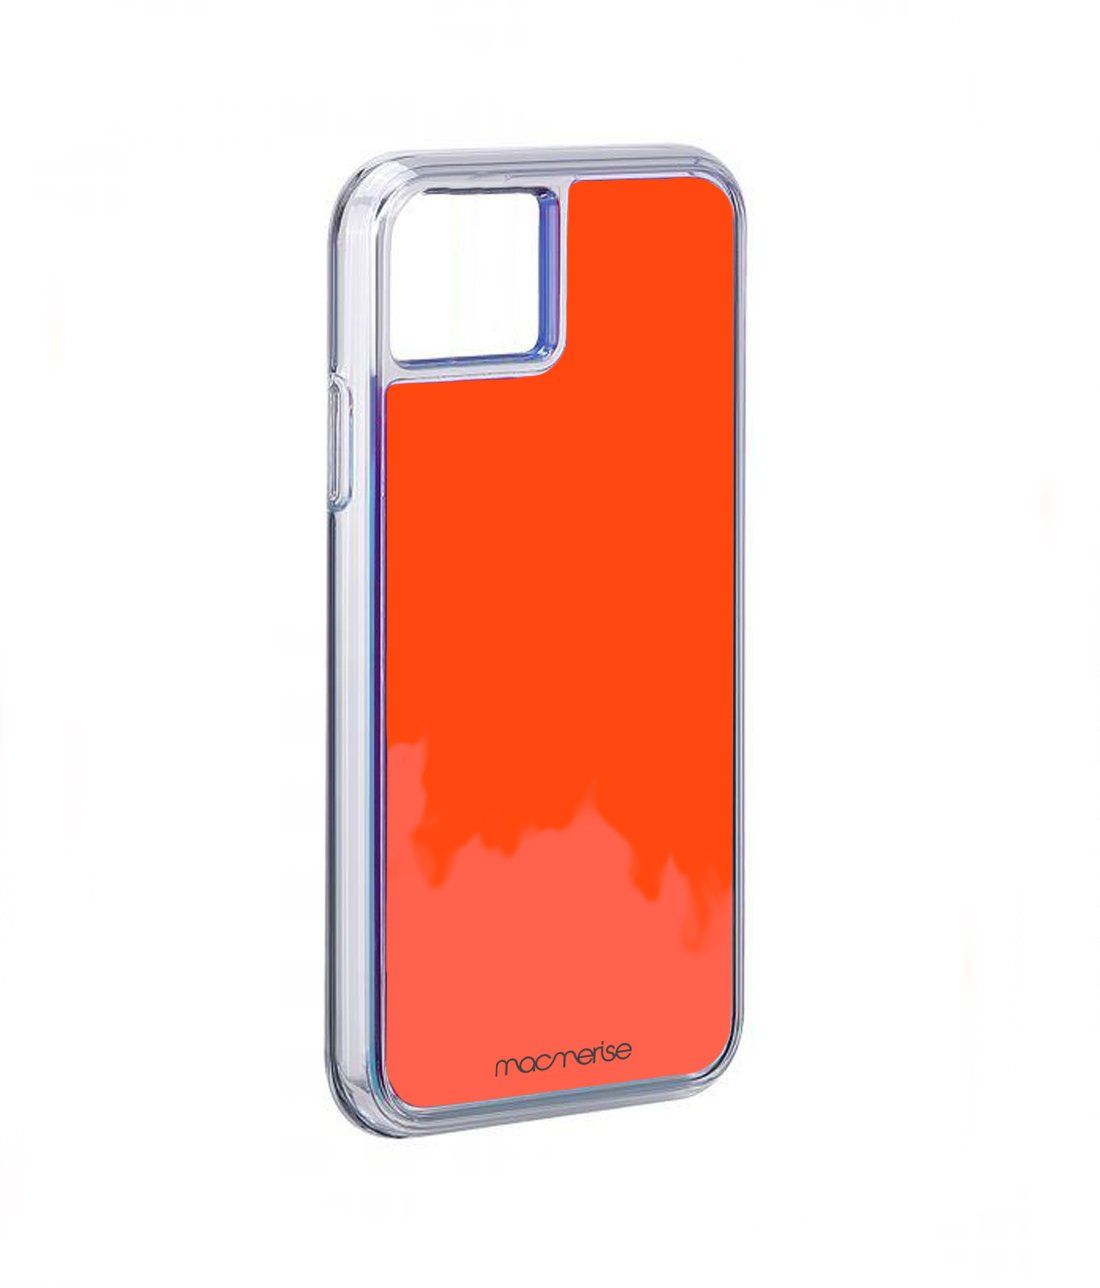 Neon Sand Orange - Neon Sand Phone Case for iPhone 11 Pro